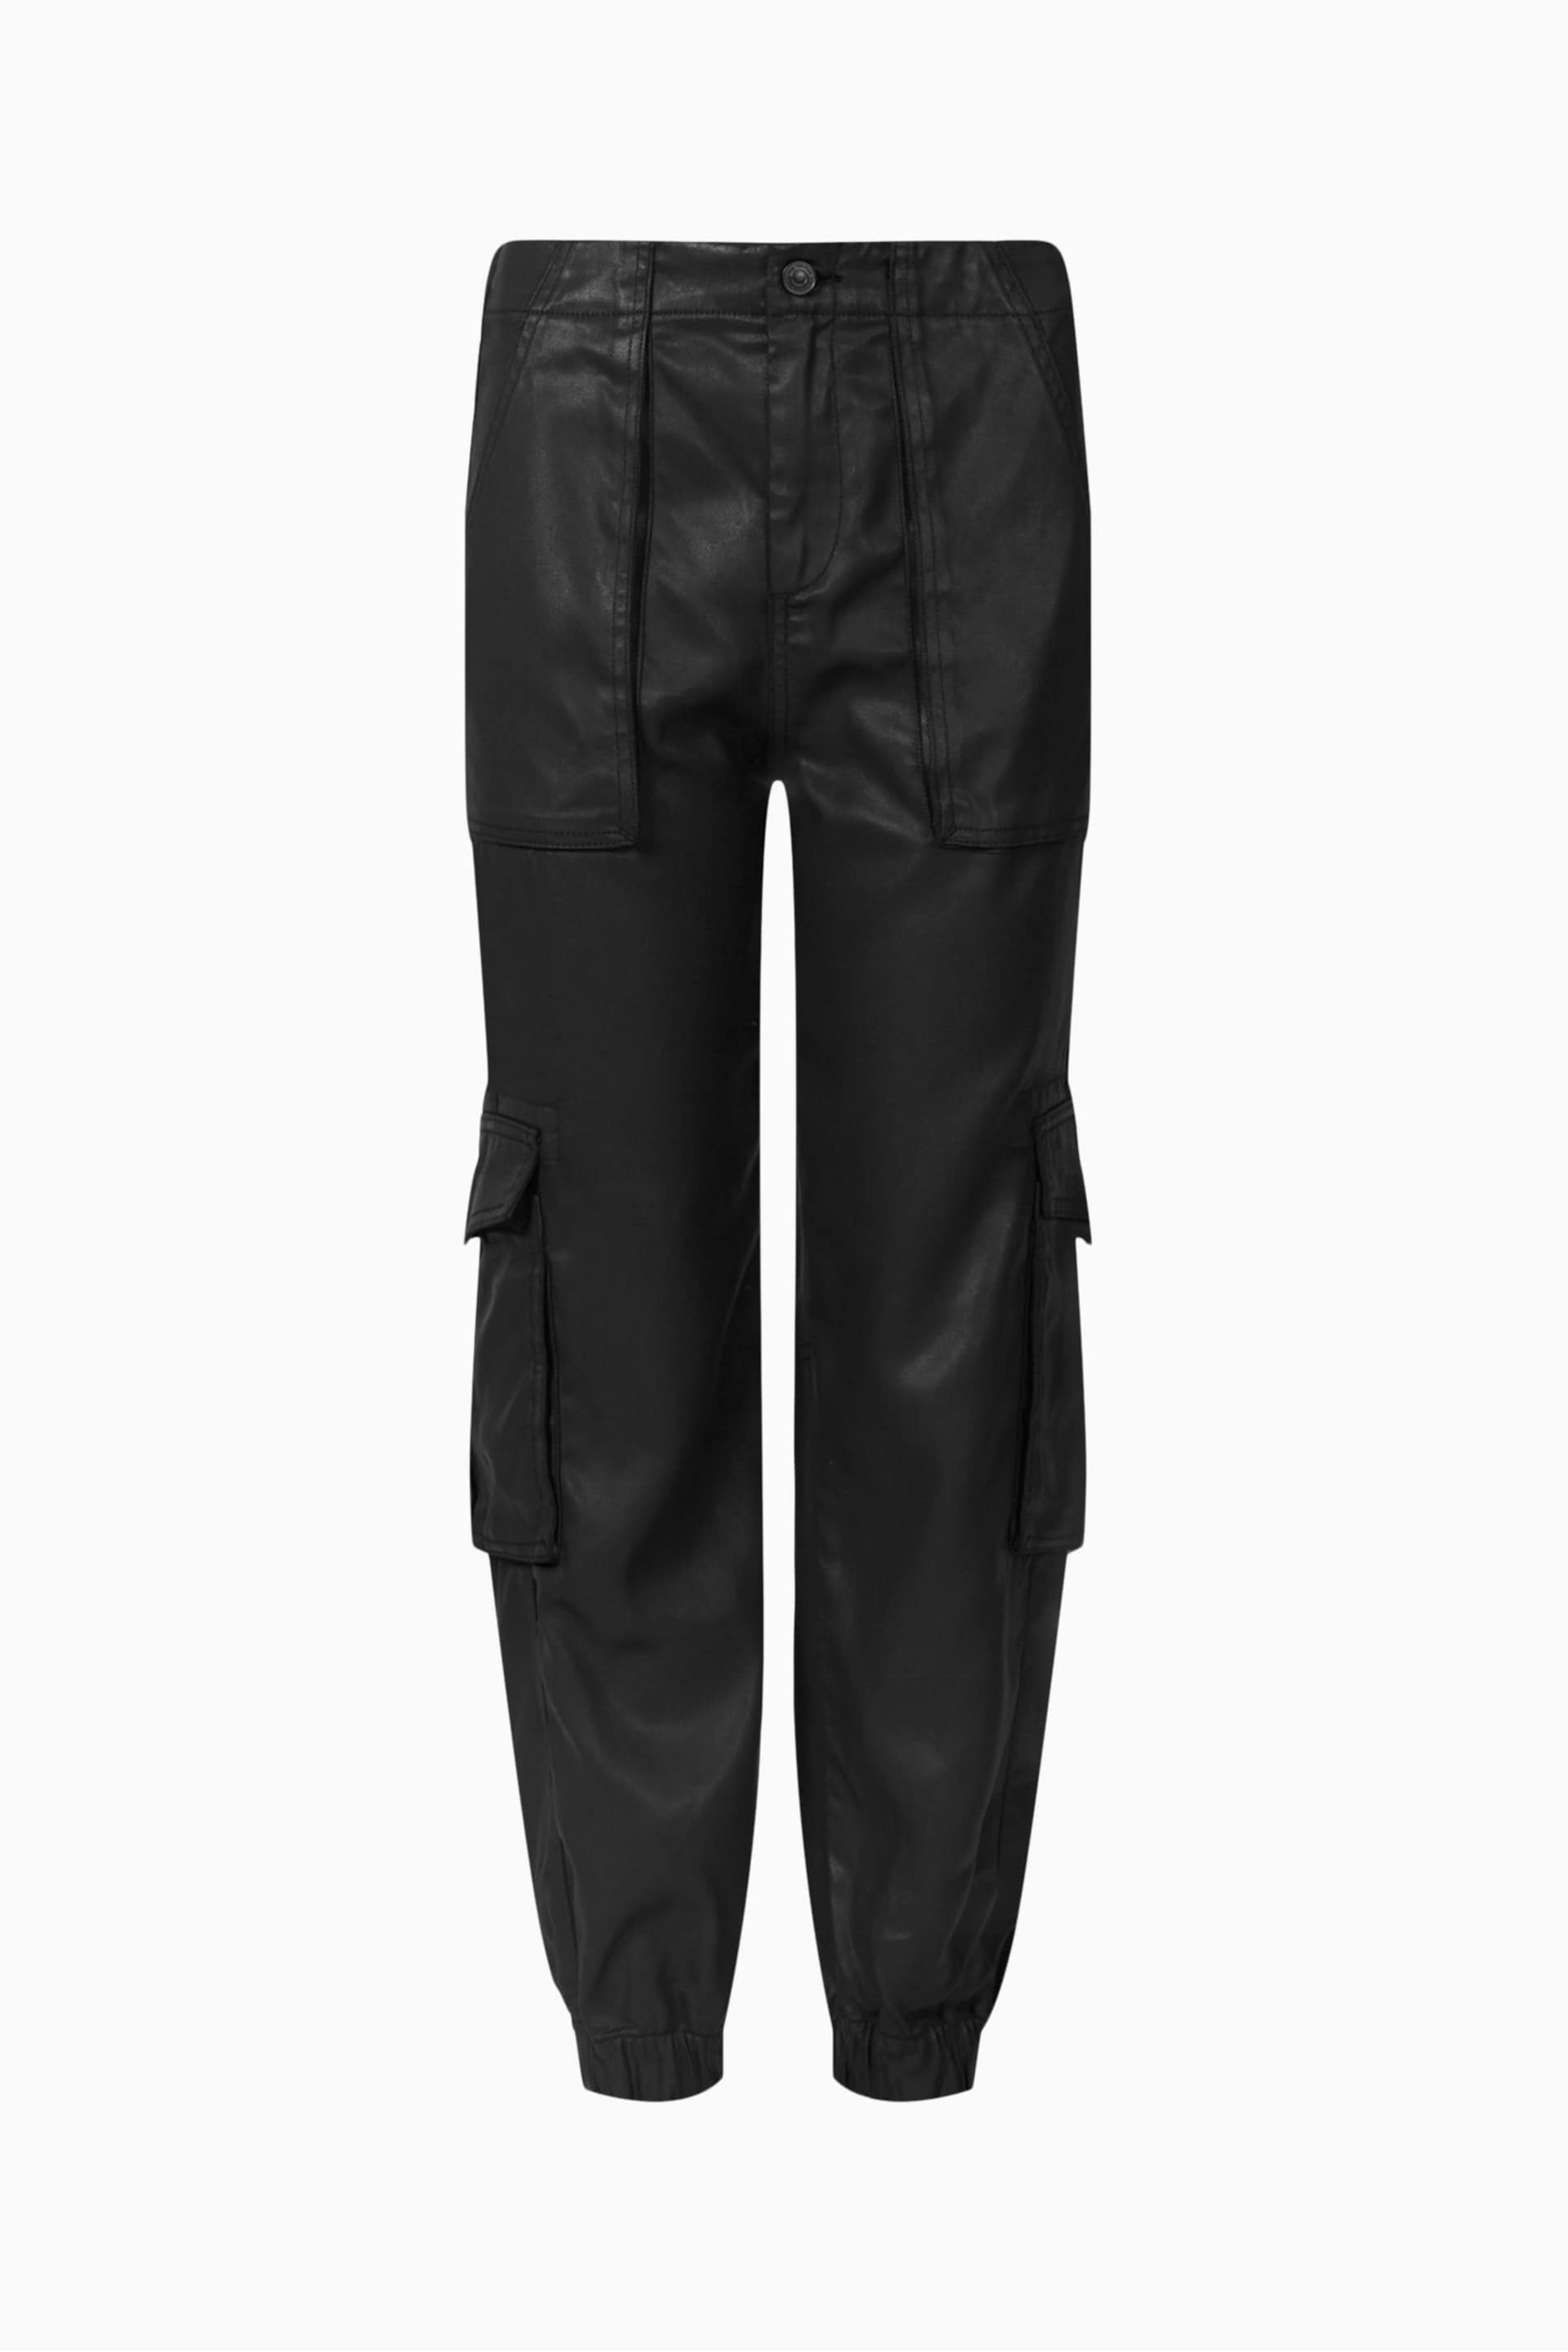 AllSaints Black Coated Frieda Trousers - Image 7 of 7